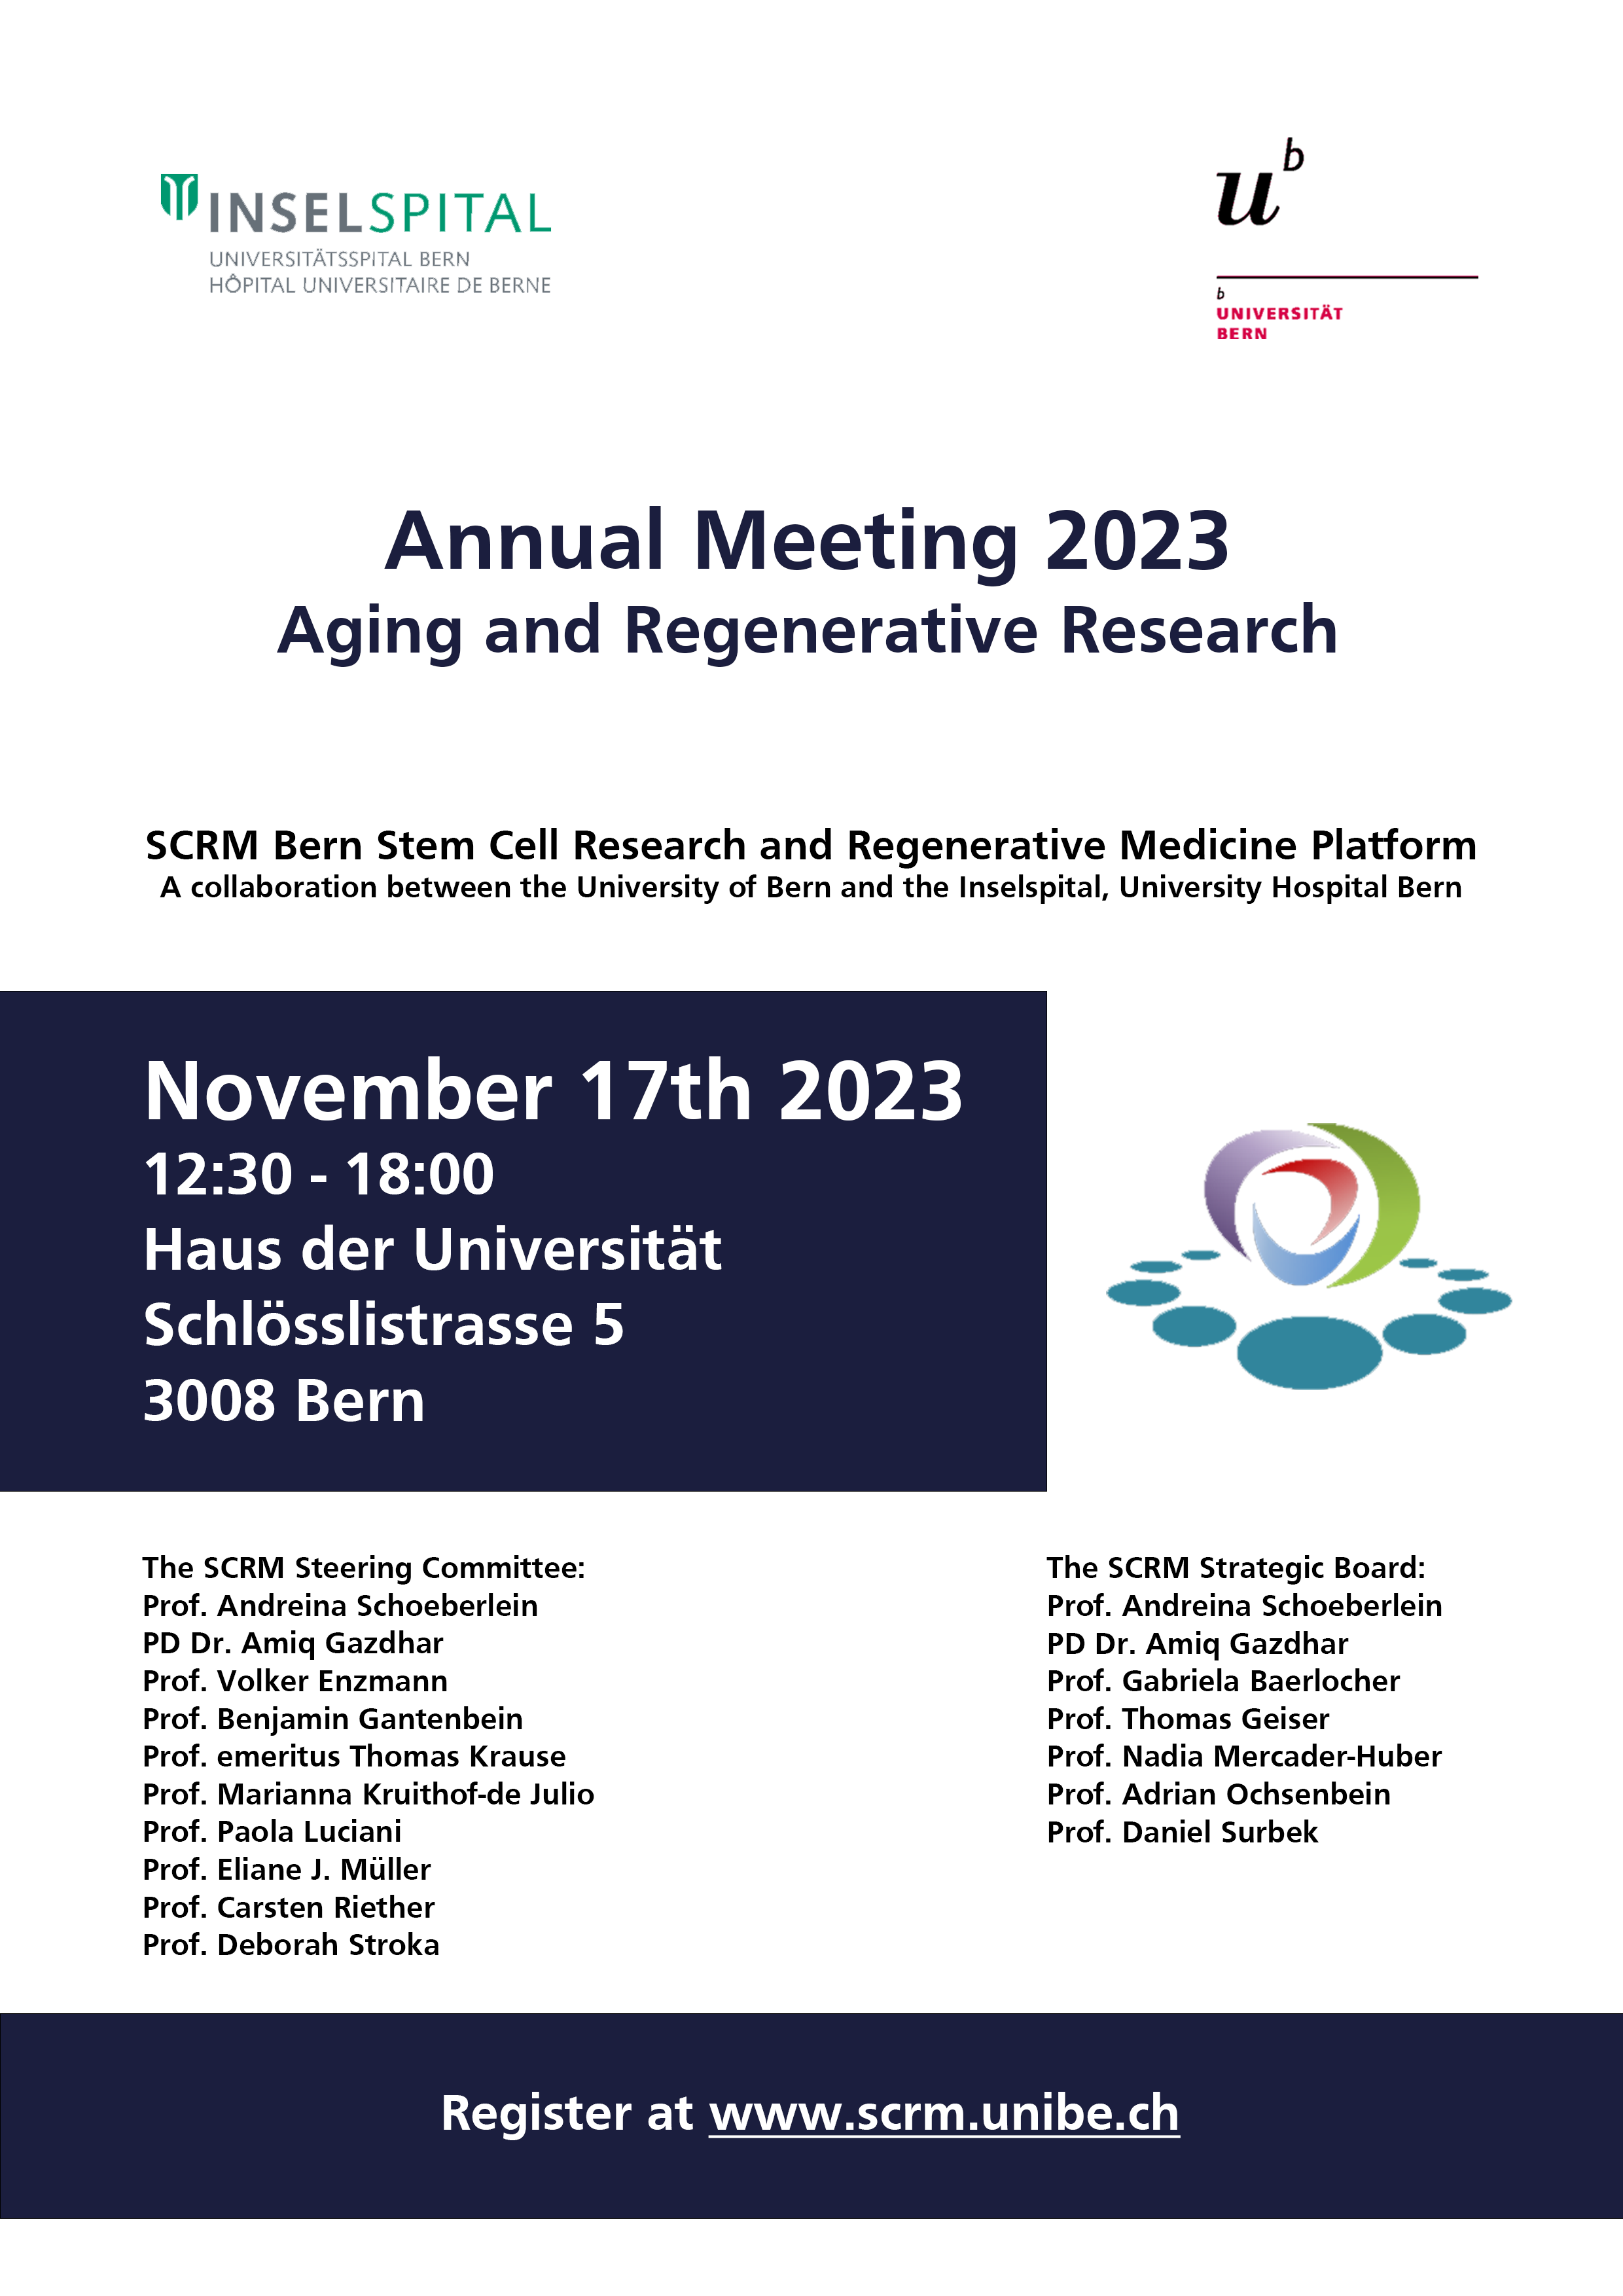 SCRM Annual Meeting 2023